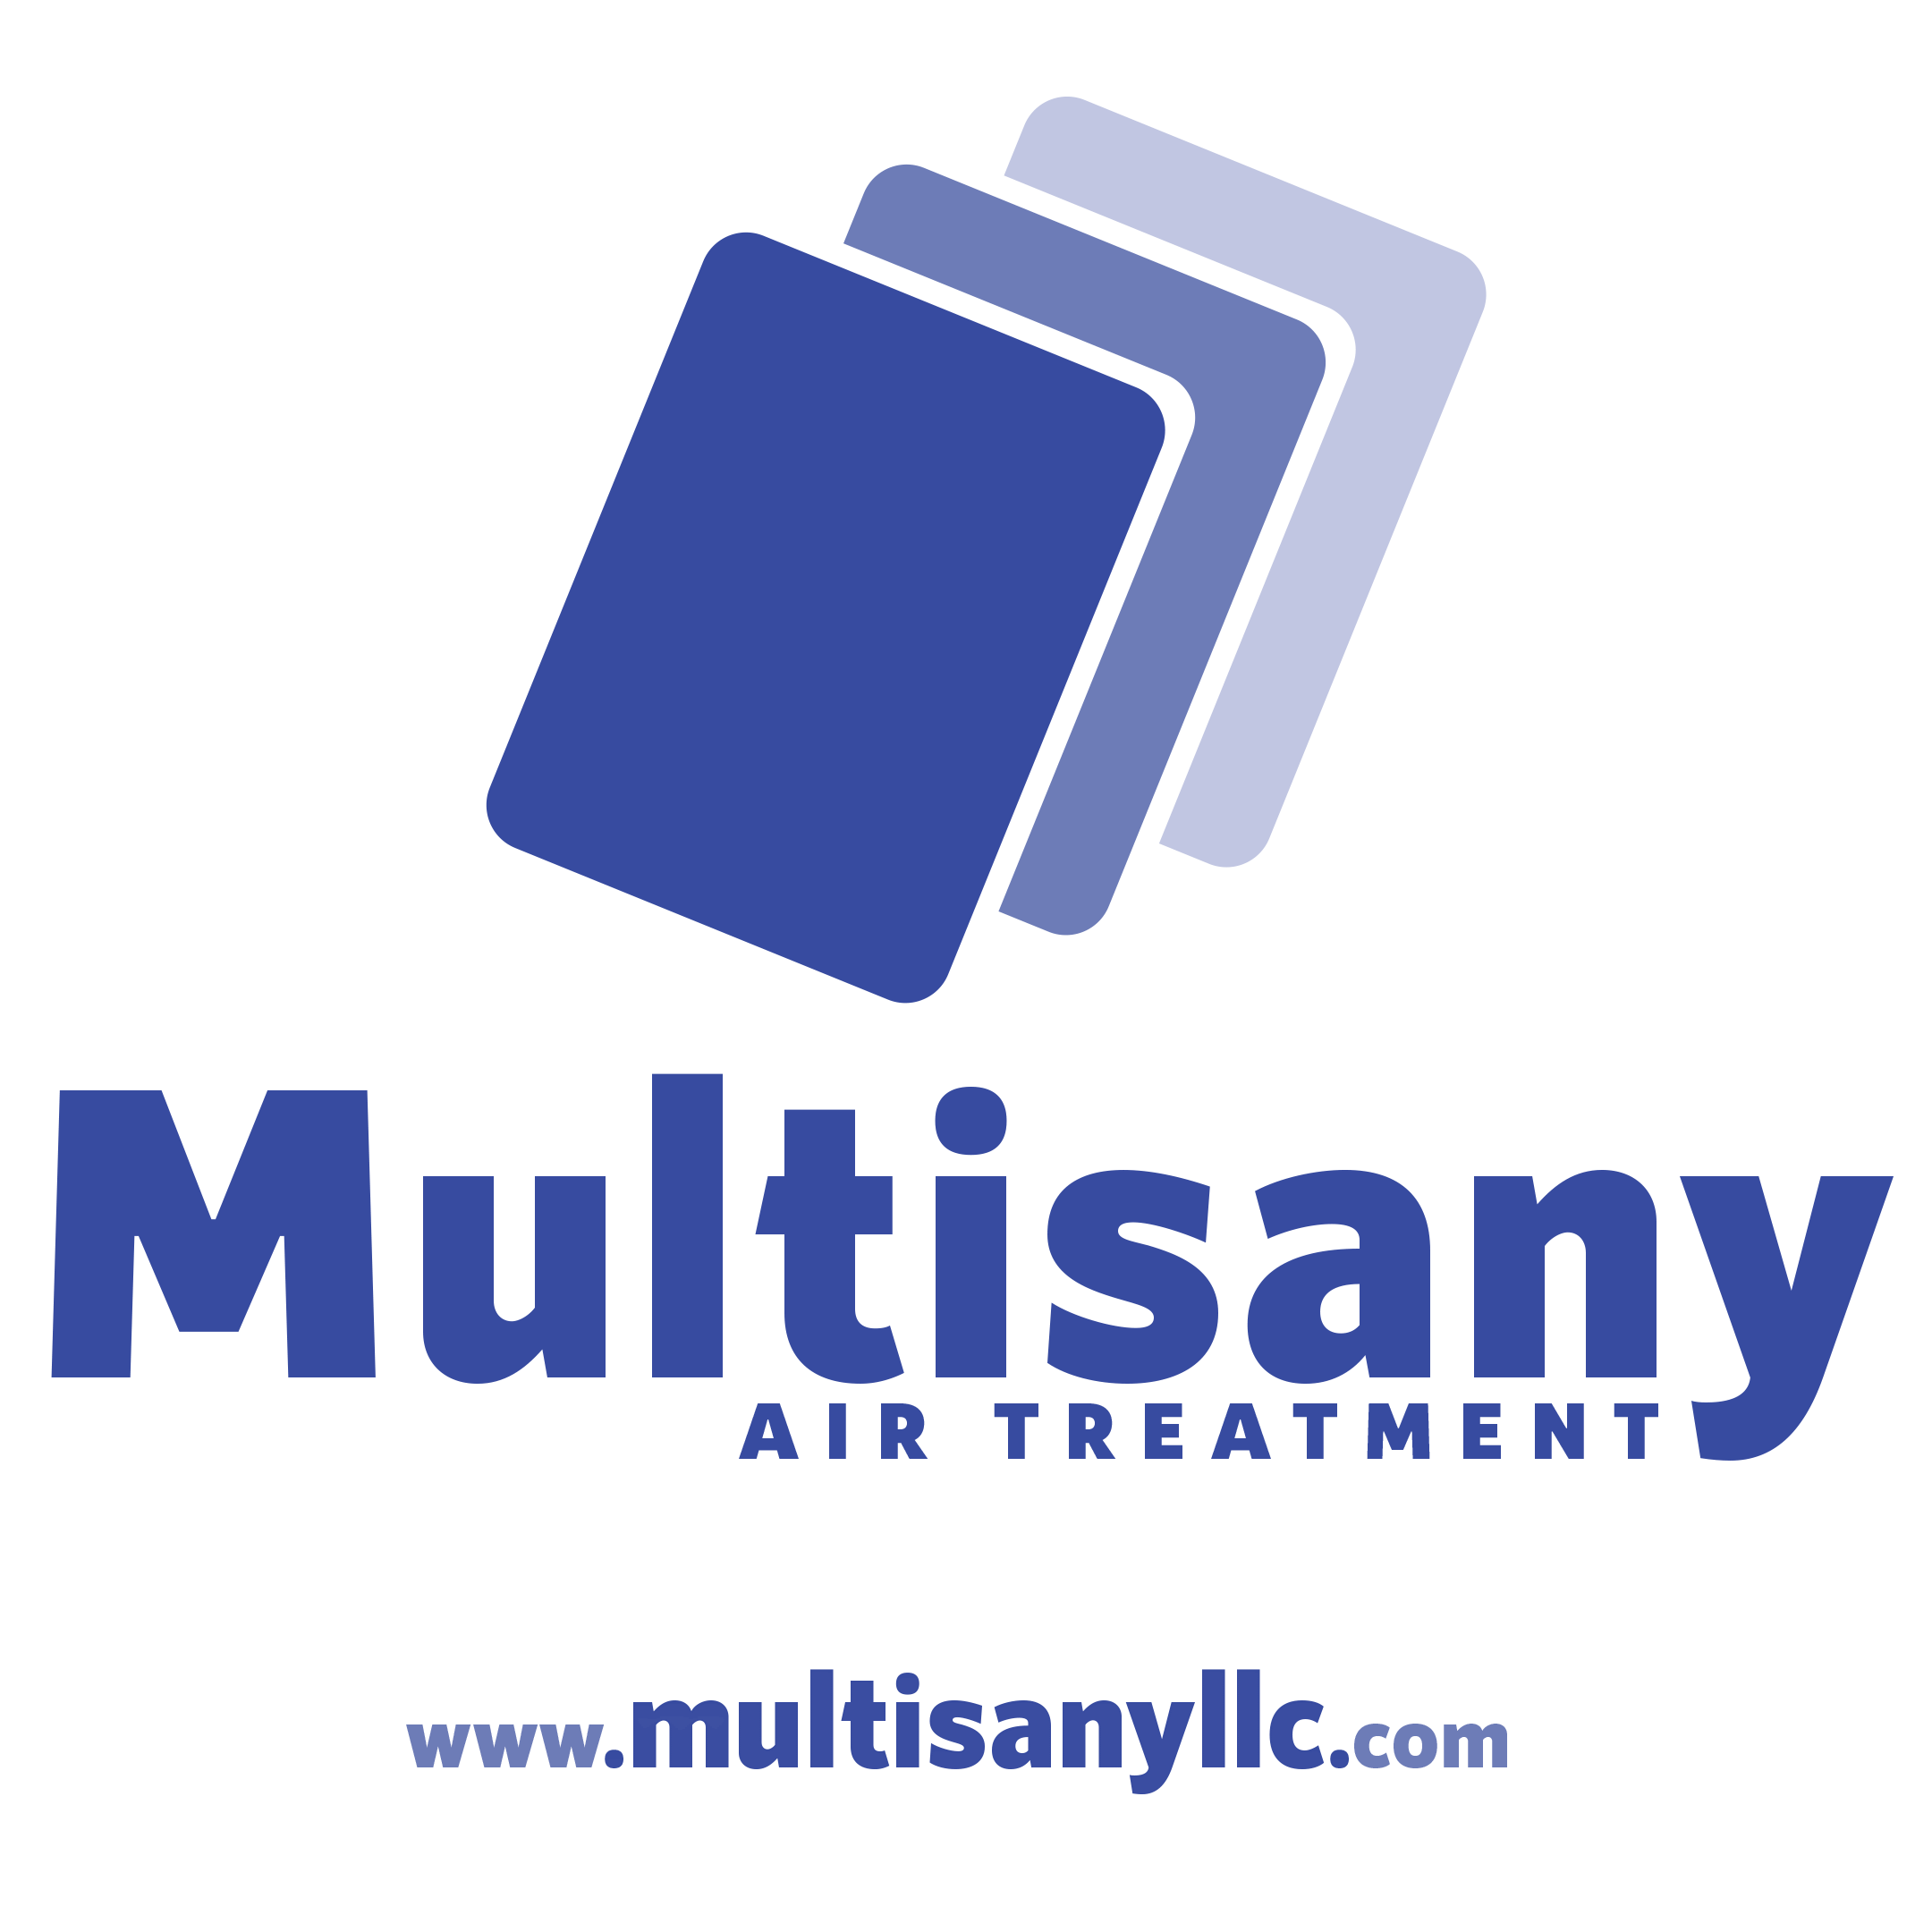 Multisany